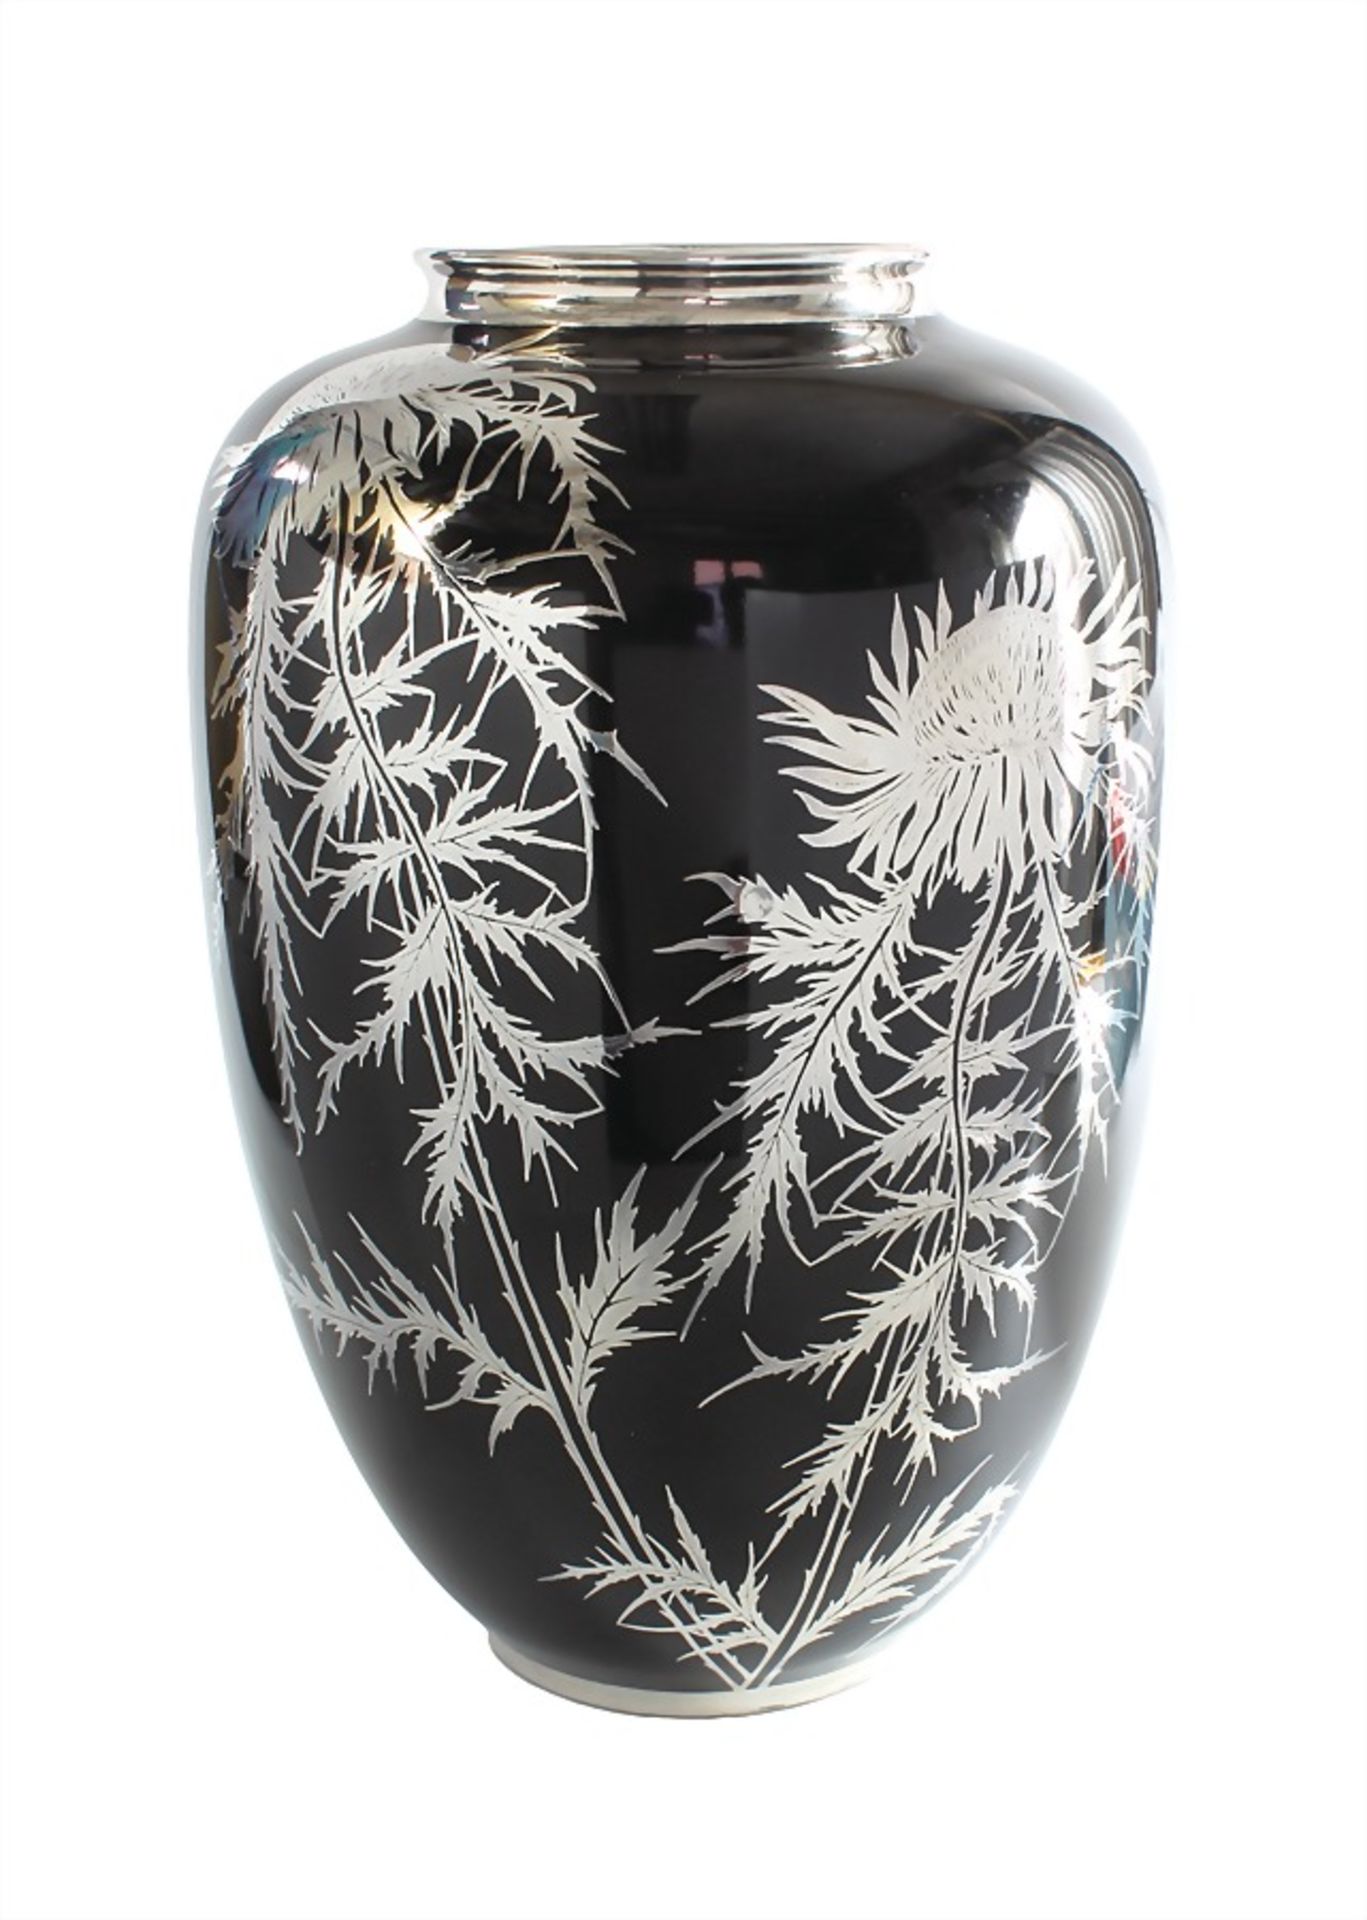 big vase, "ART-DECO" 1930/'40s, 1000 silver OVERLAY, signed Hertel Jacob Bavaria 1000/1000,